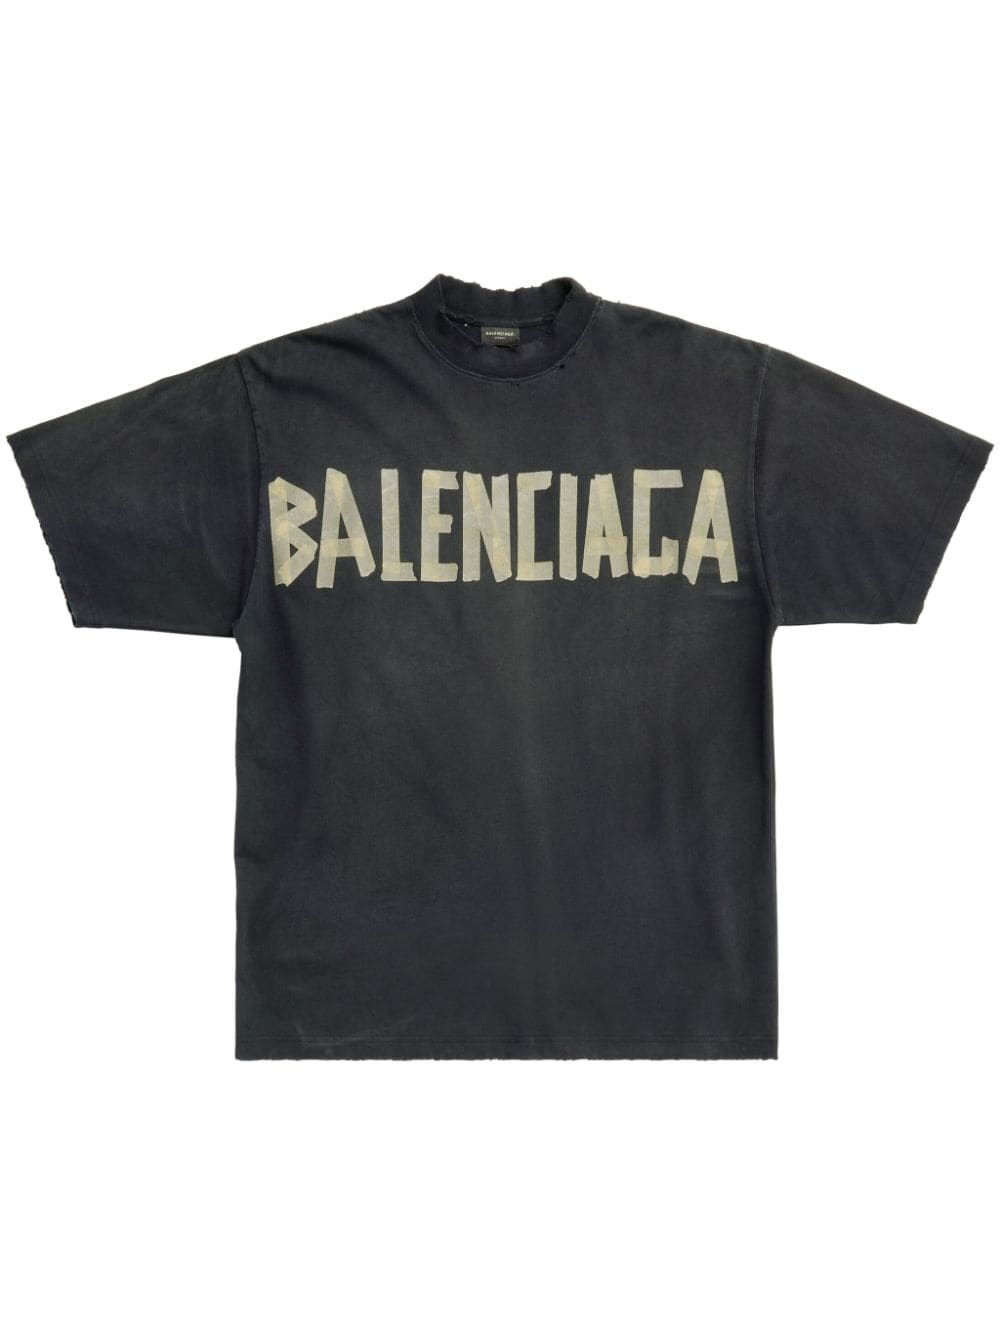 Image 1 of Balenciaga playera Tape Type